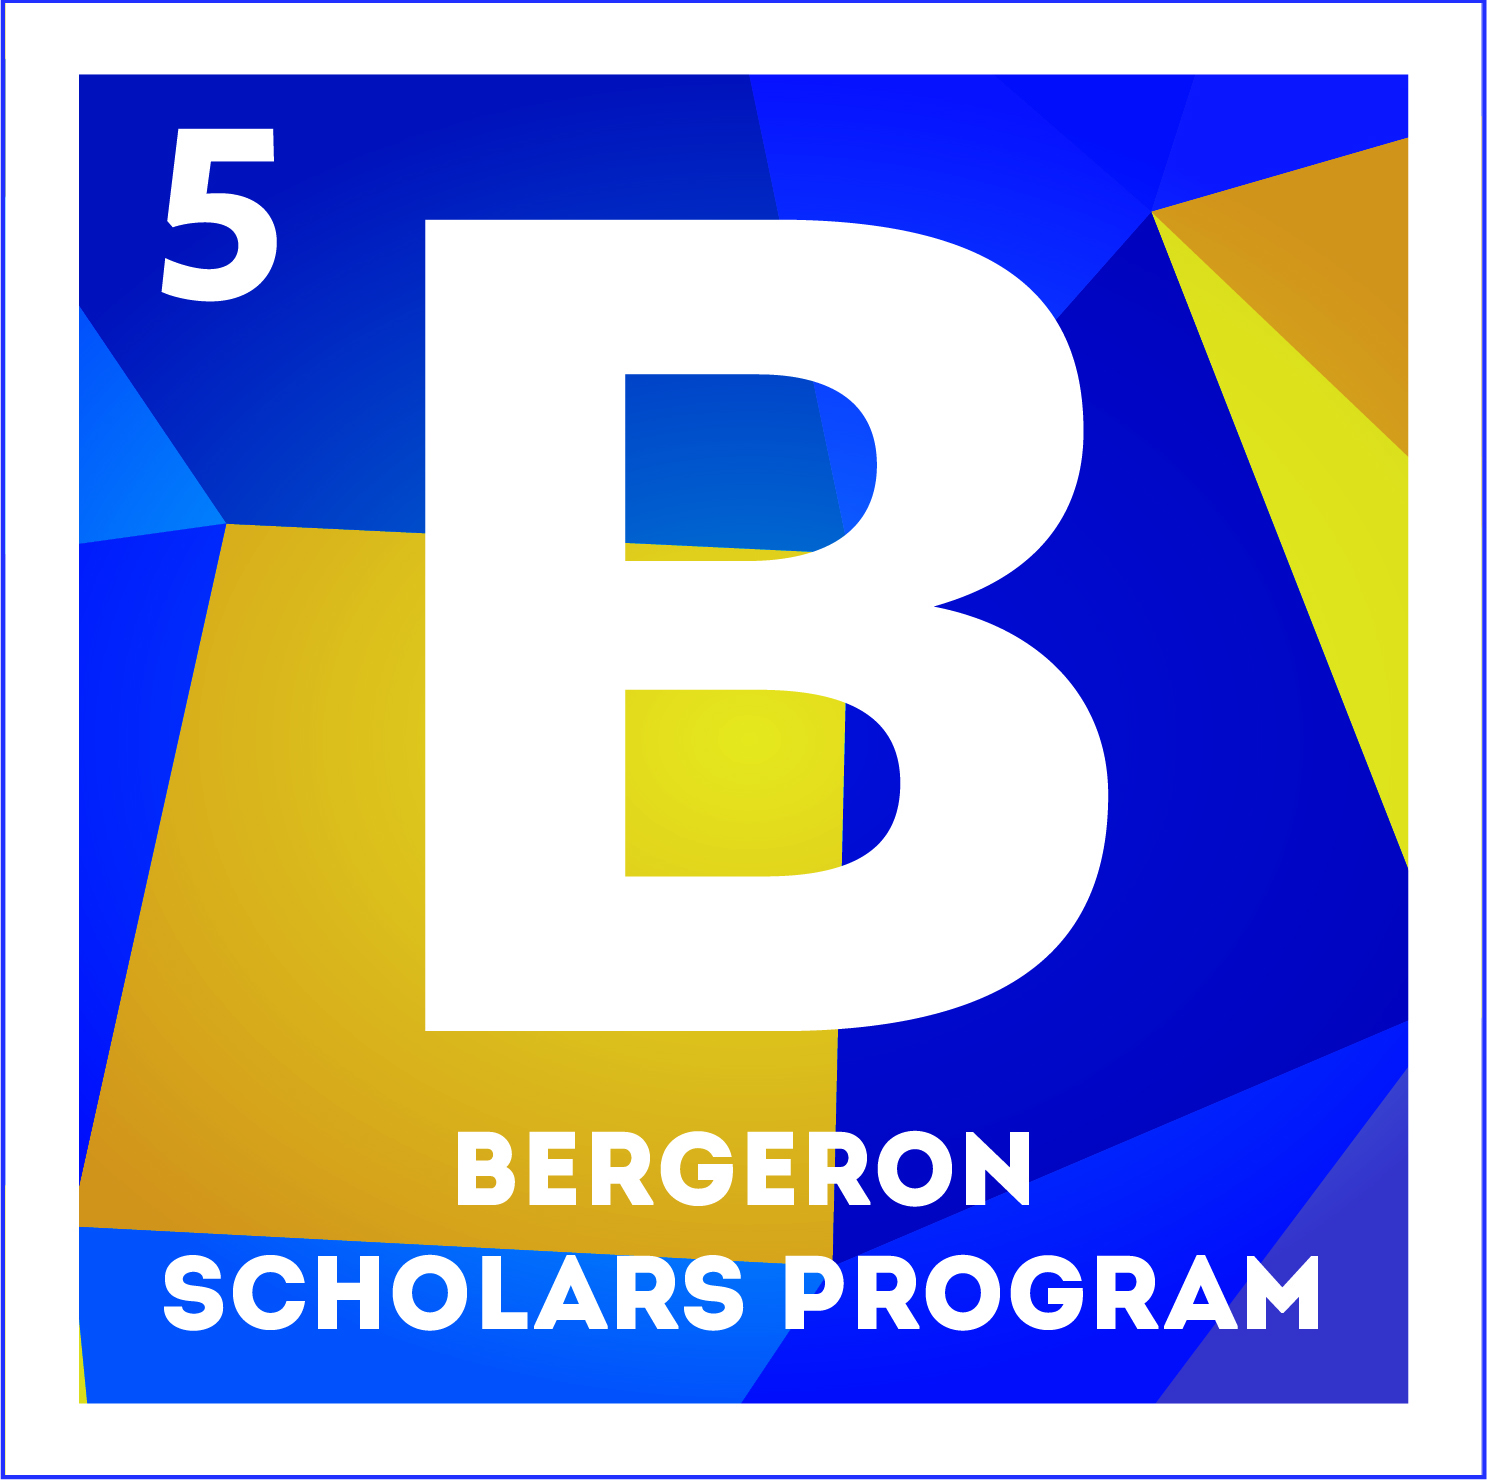 Bergeron Women in STEM Scholarship Program - Cal NERDS logo